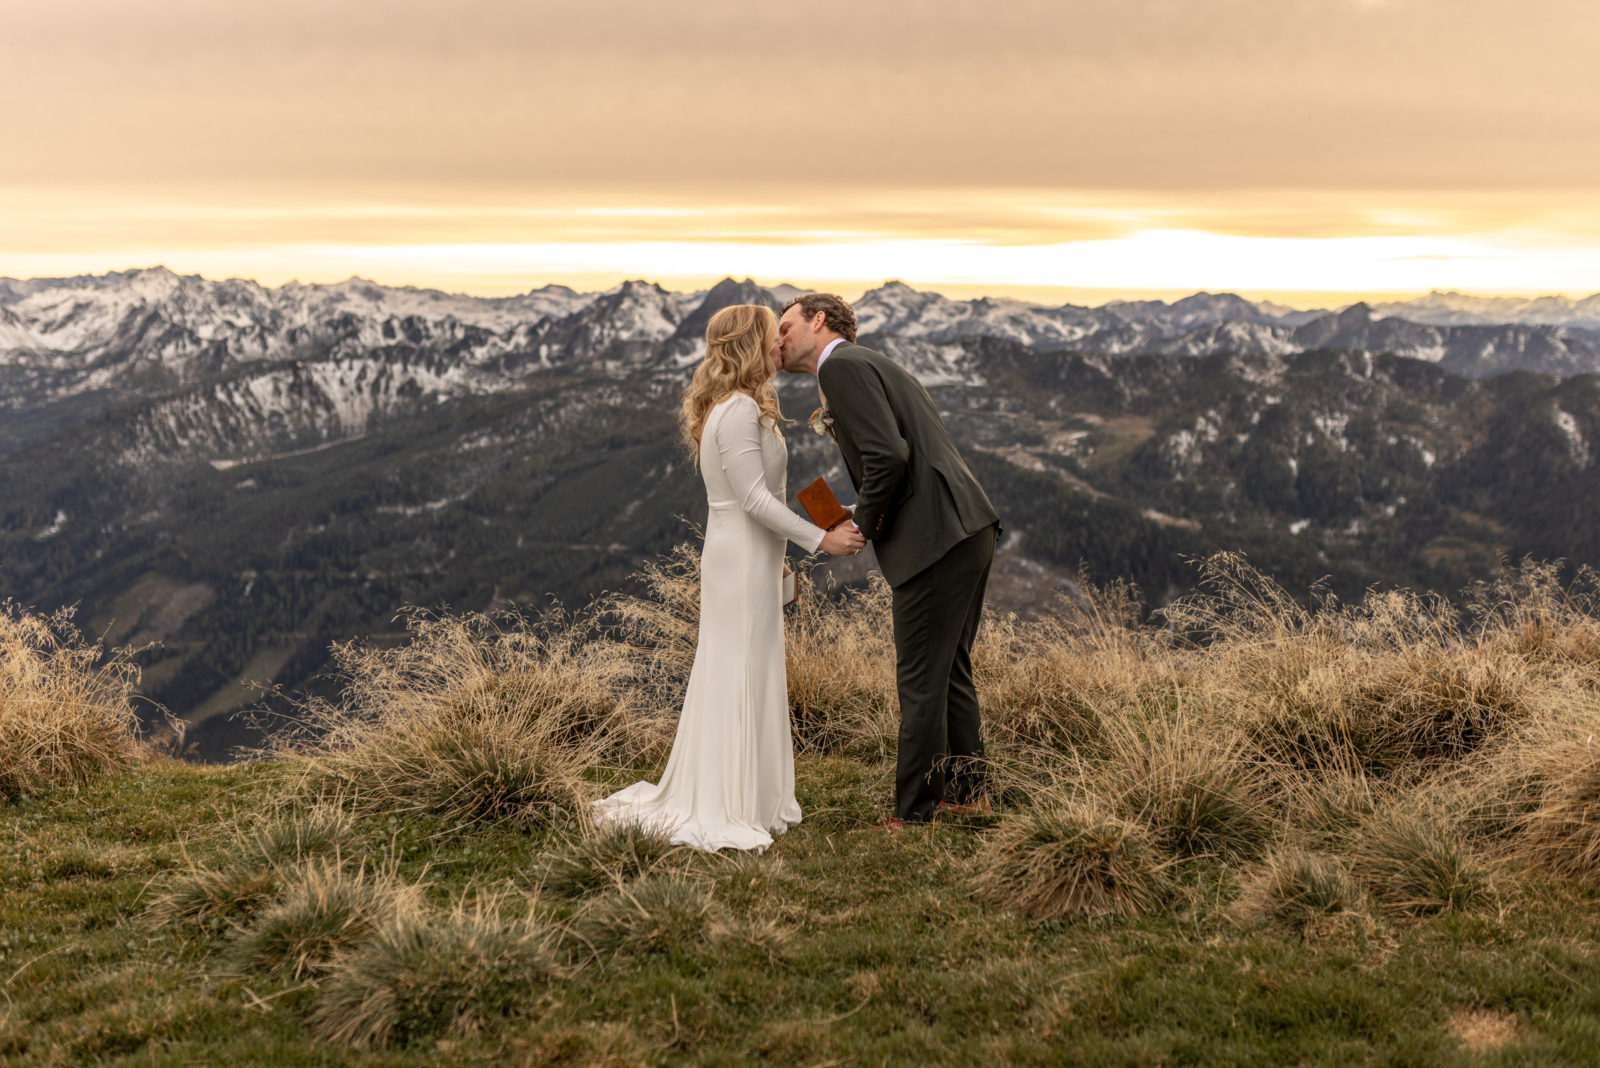 heiraten in den bergen fotografen